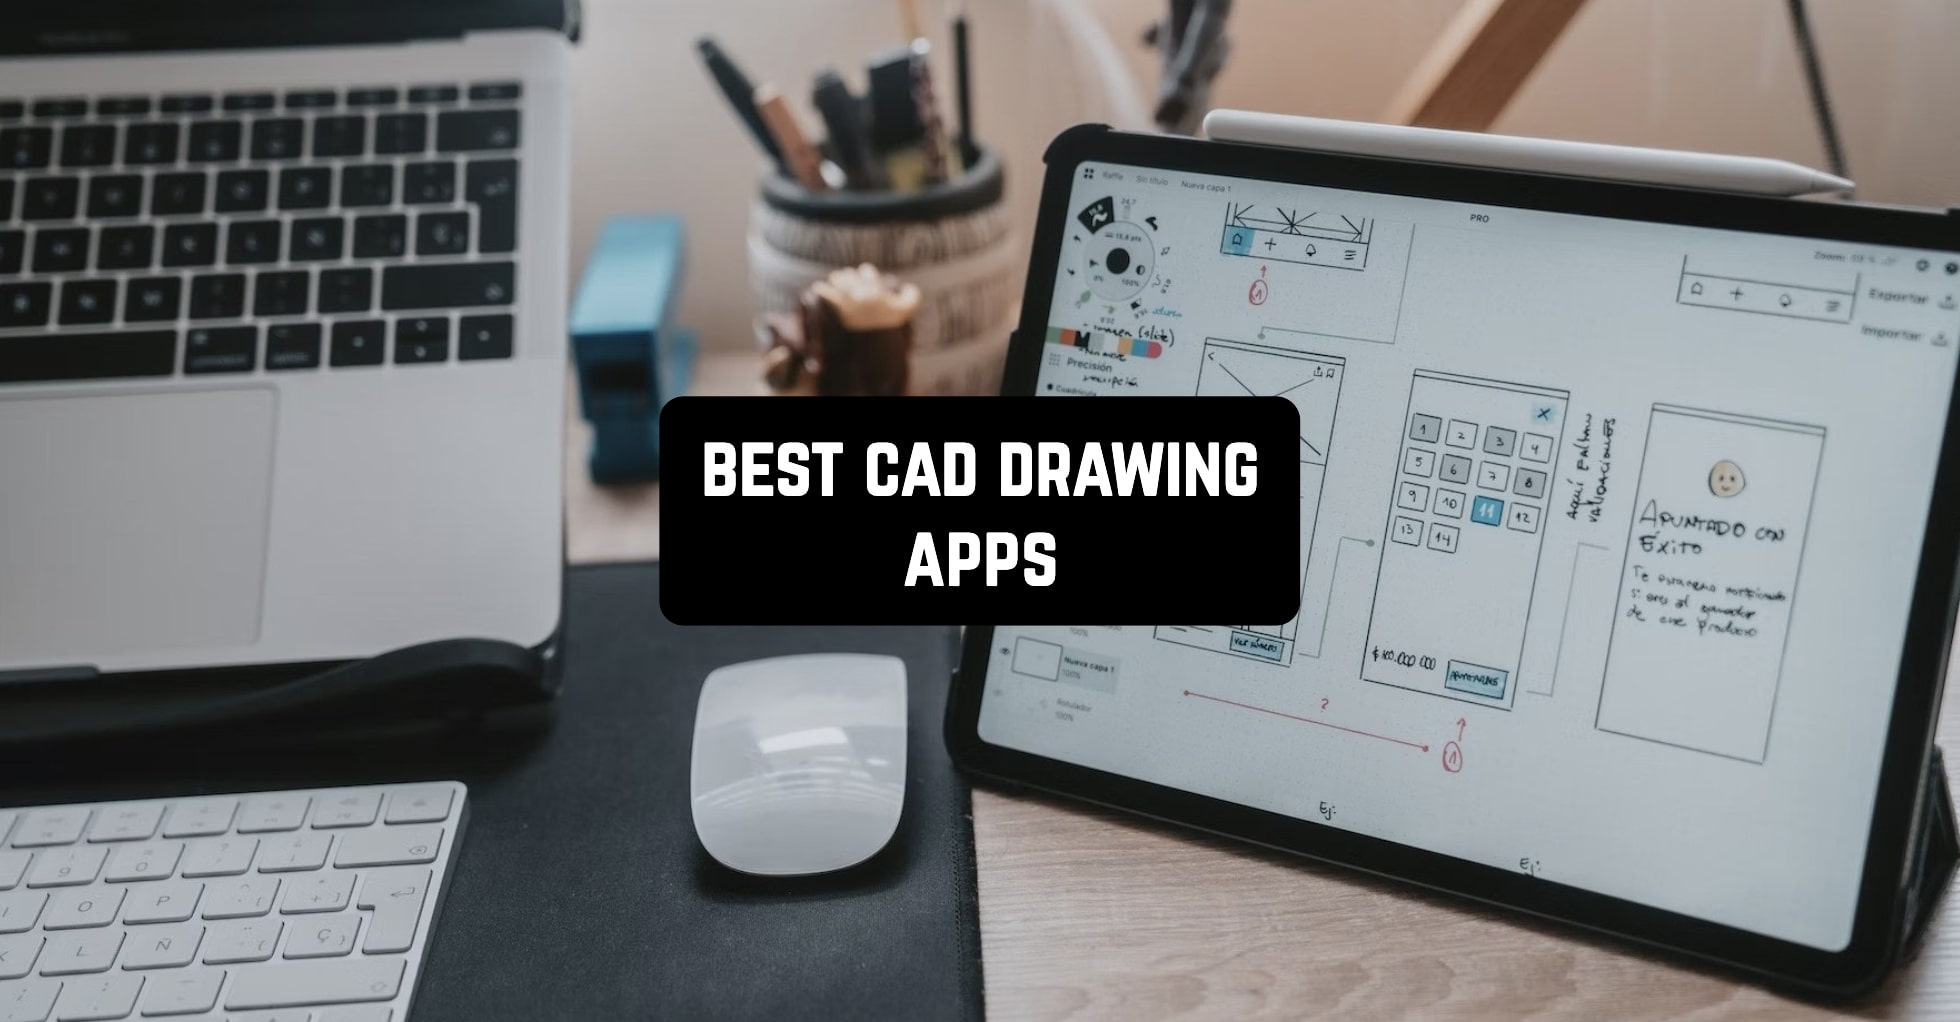 Paper Sketch App Makes Drawing Tools Free